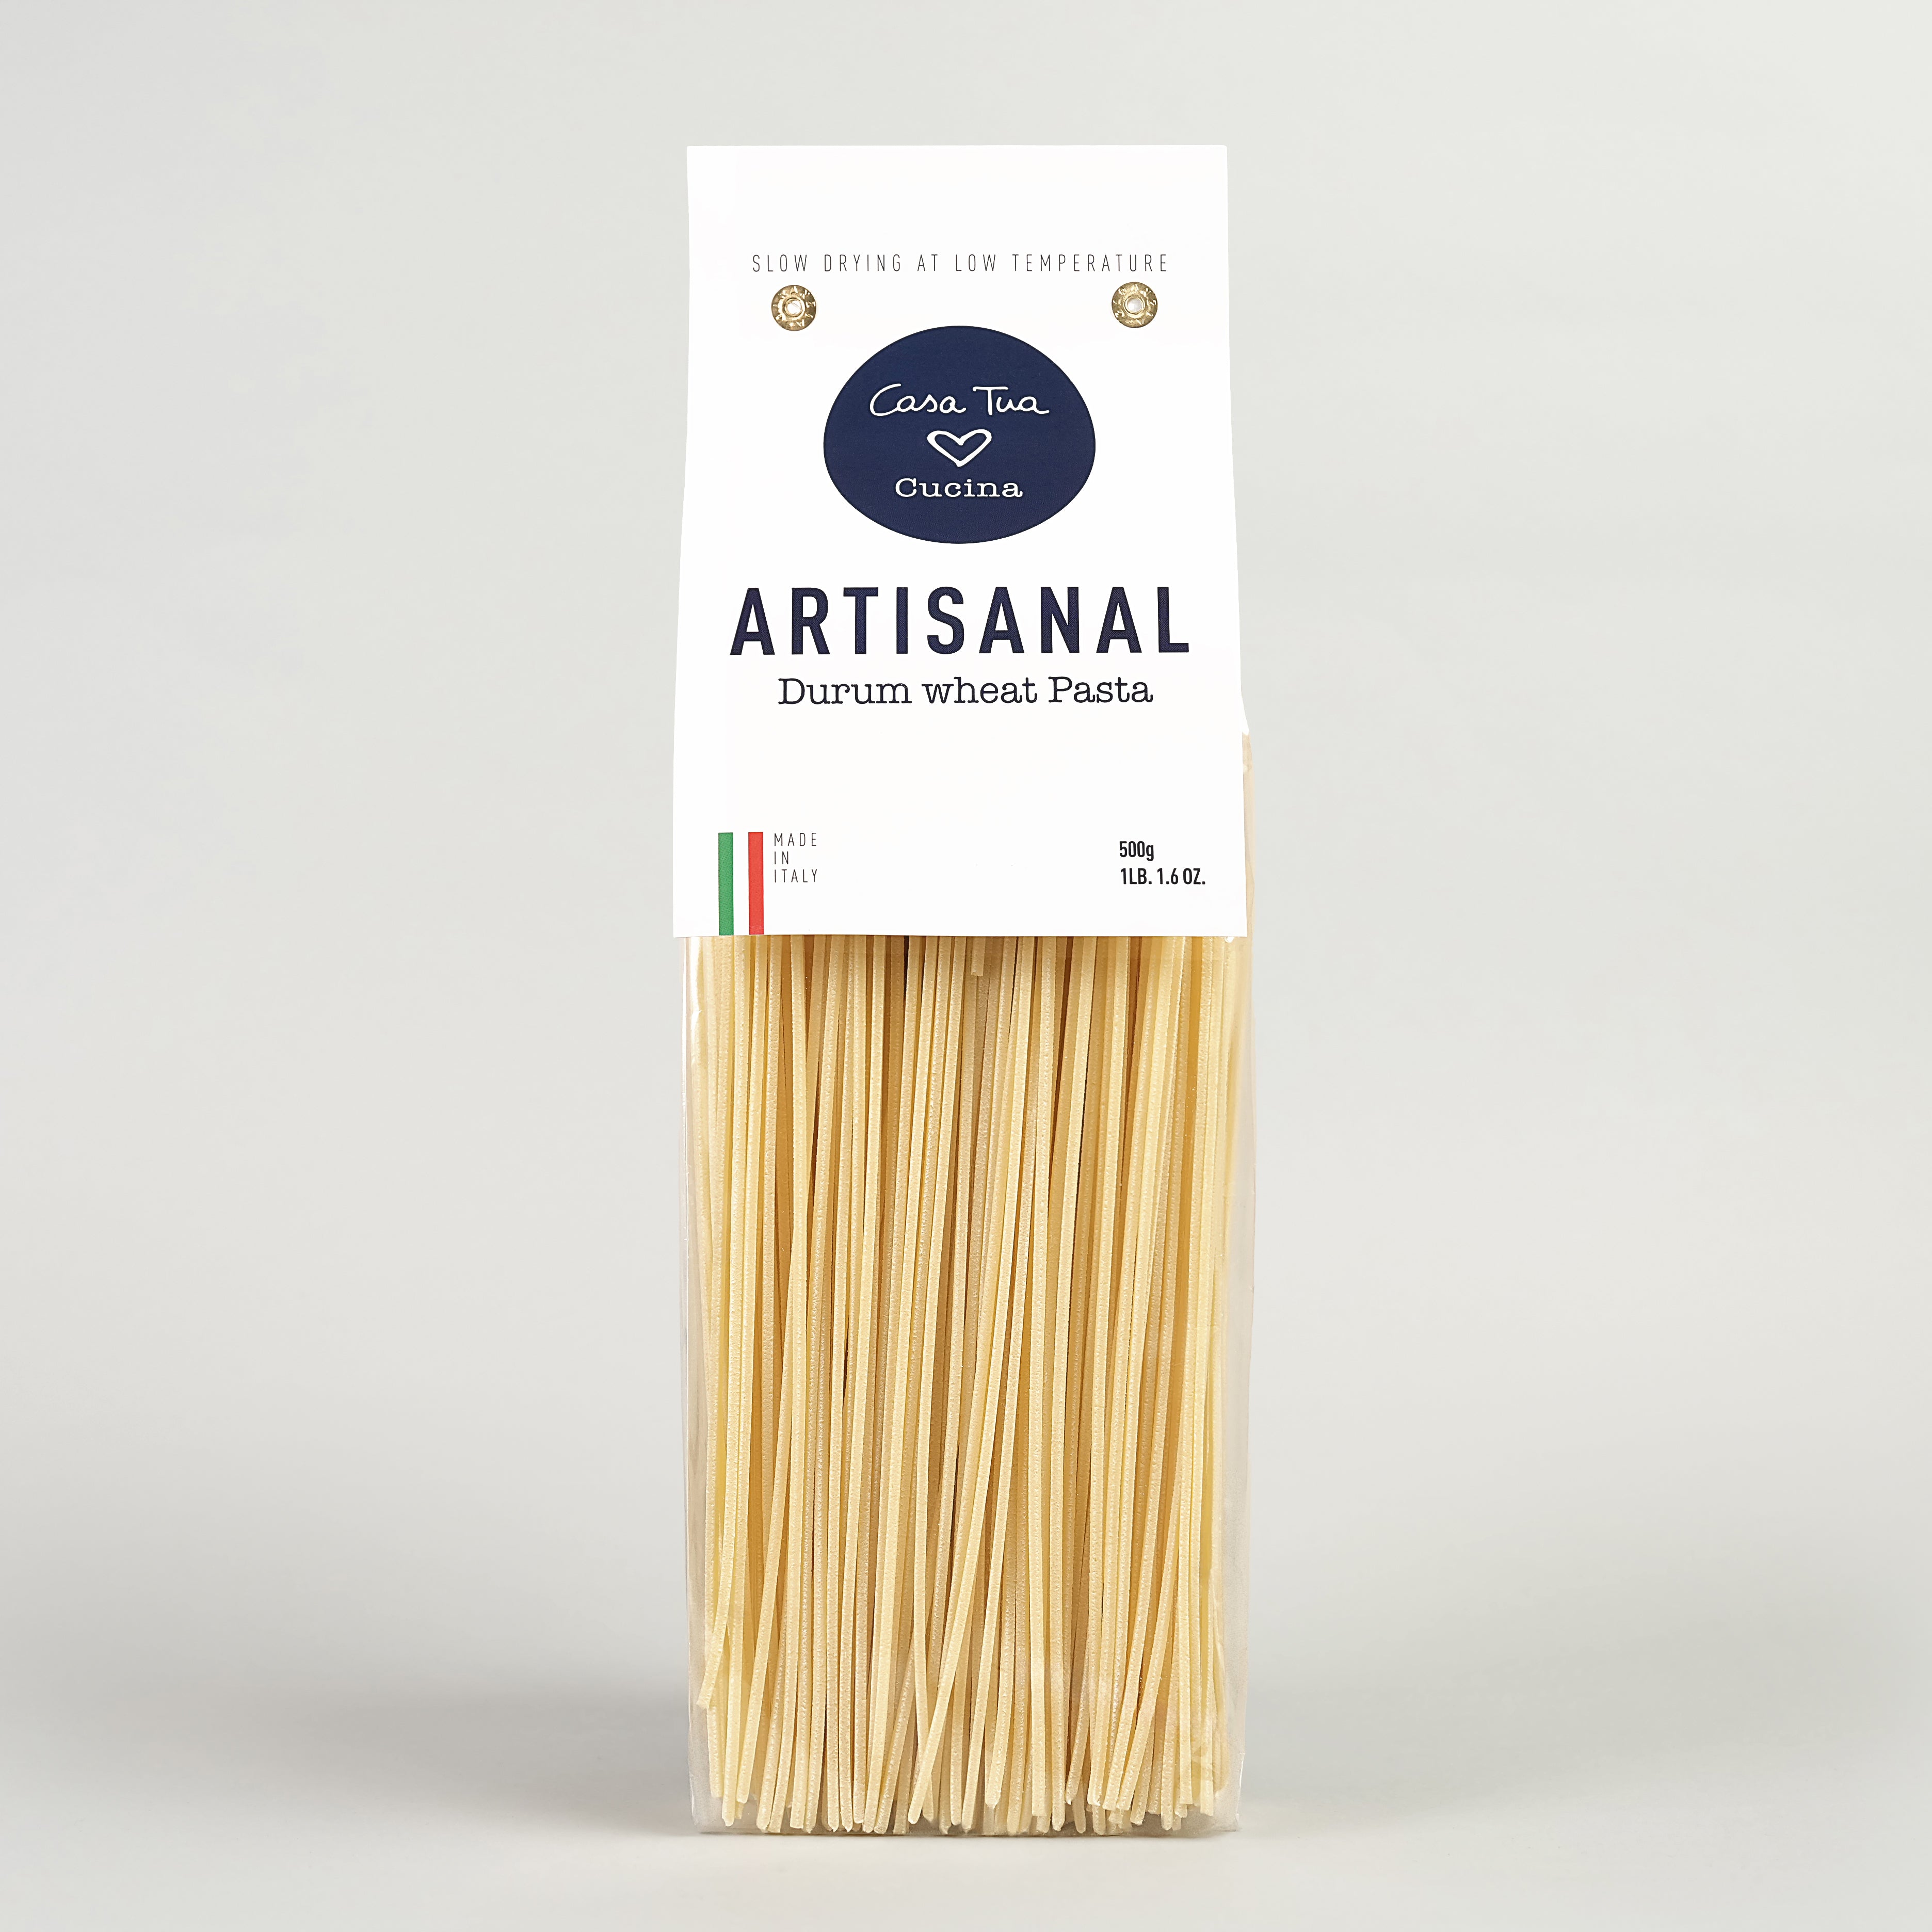 Artisanal Durum Wheat Pasta “Spaghetti” - 1lb.